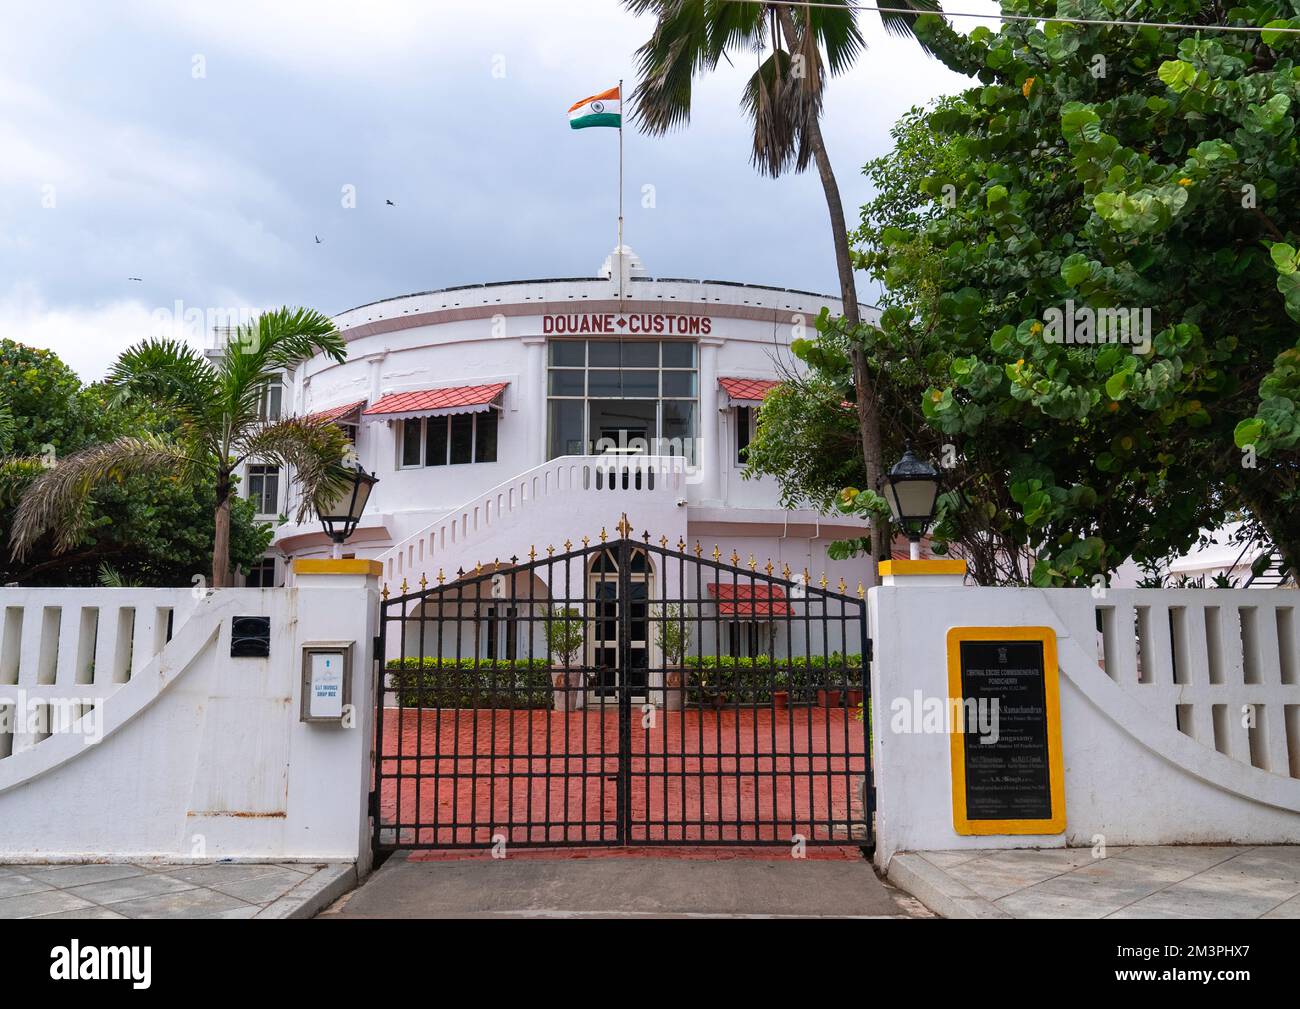 Douane customs building, Pondicherry, Puducherry, India Stock Photo